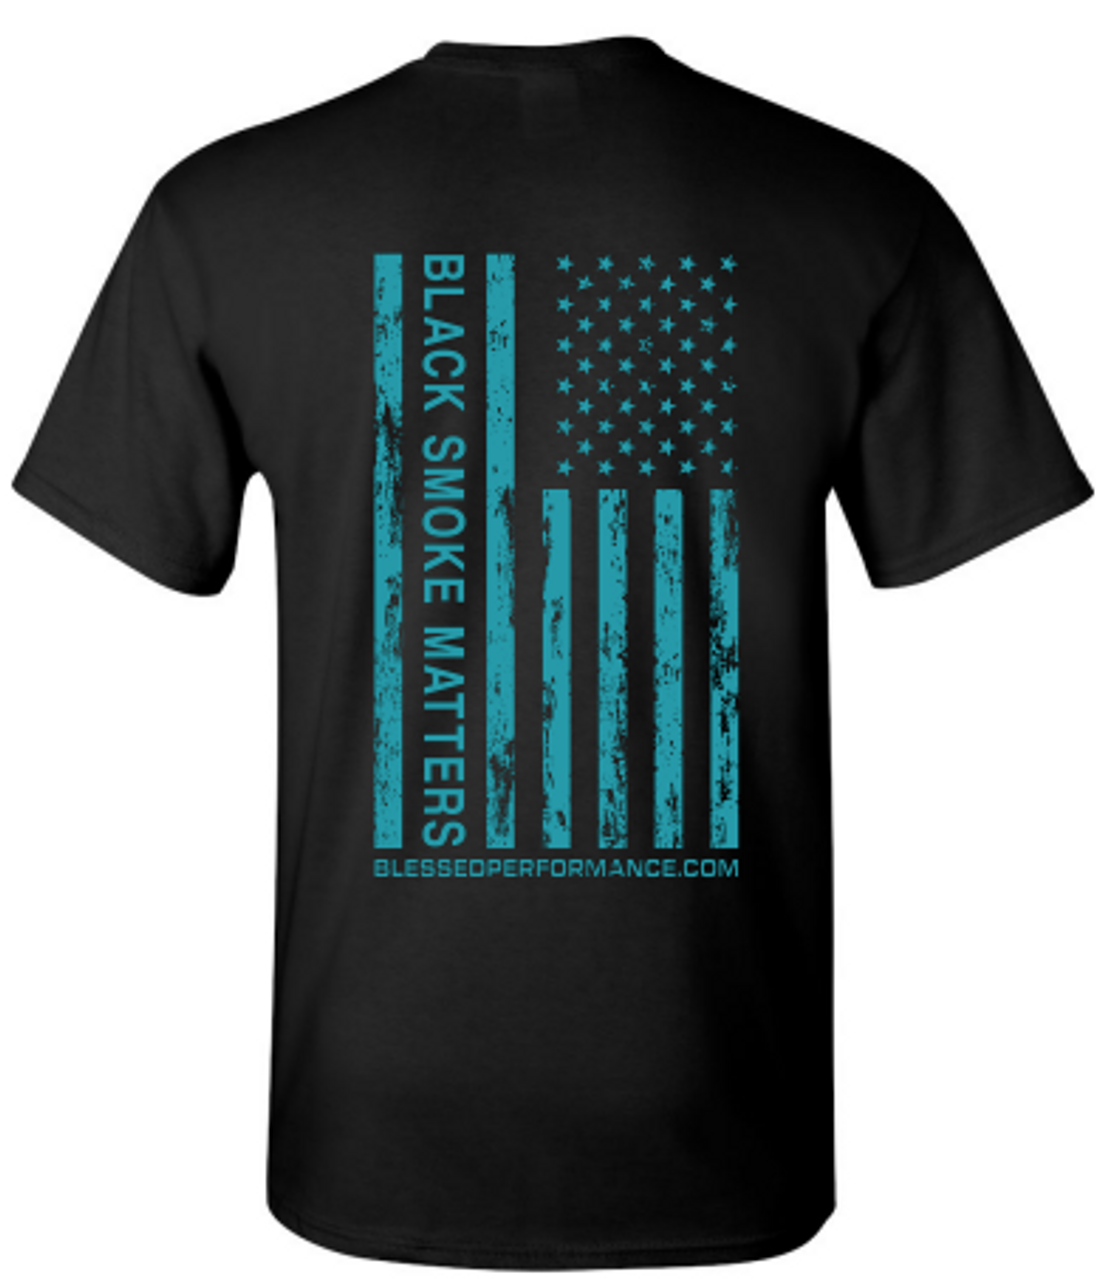  "BLACK SMOKE MATTERS" Teal on Black Flag Design T-Shirt (BSM_T&B_SHIRT) Back View